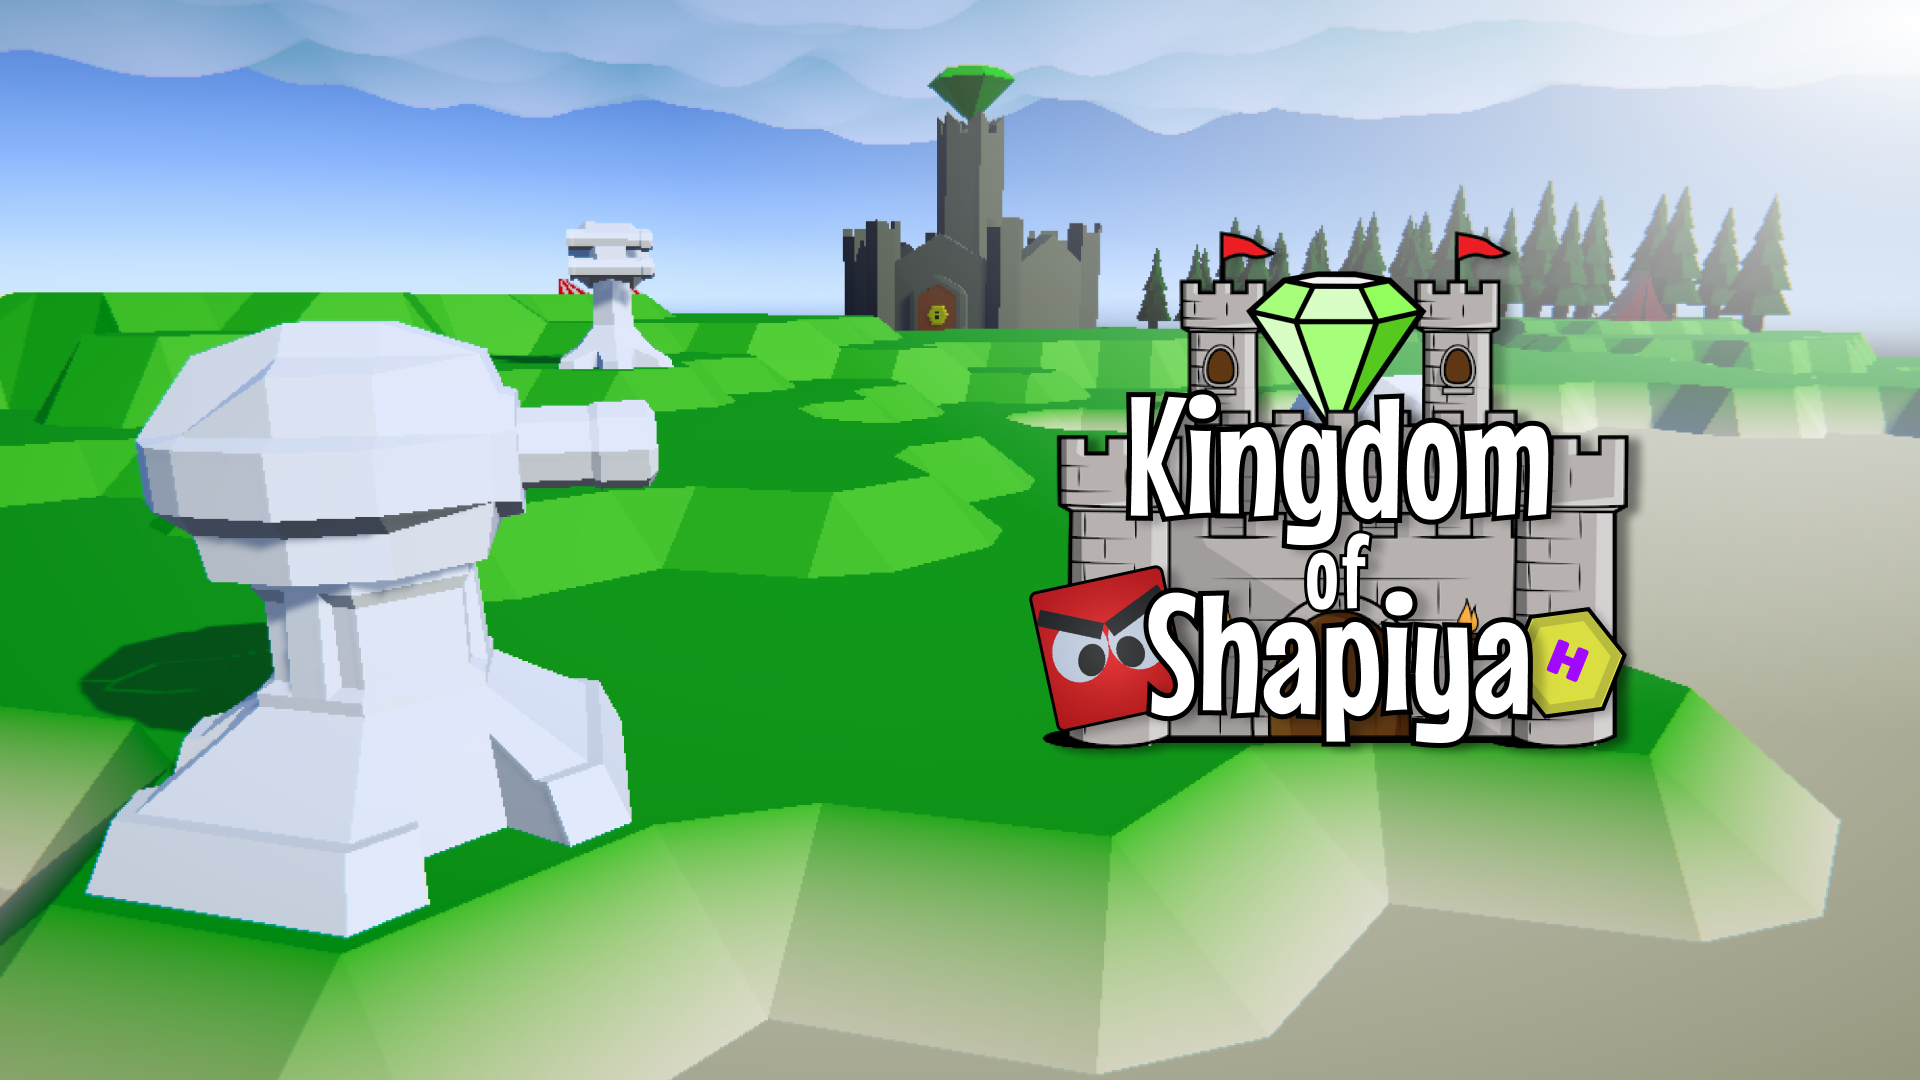 Kingdom of Shapiya